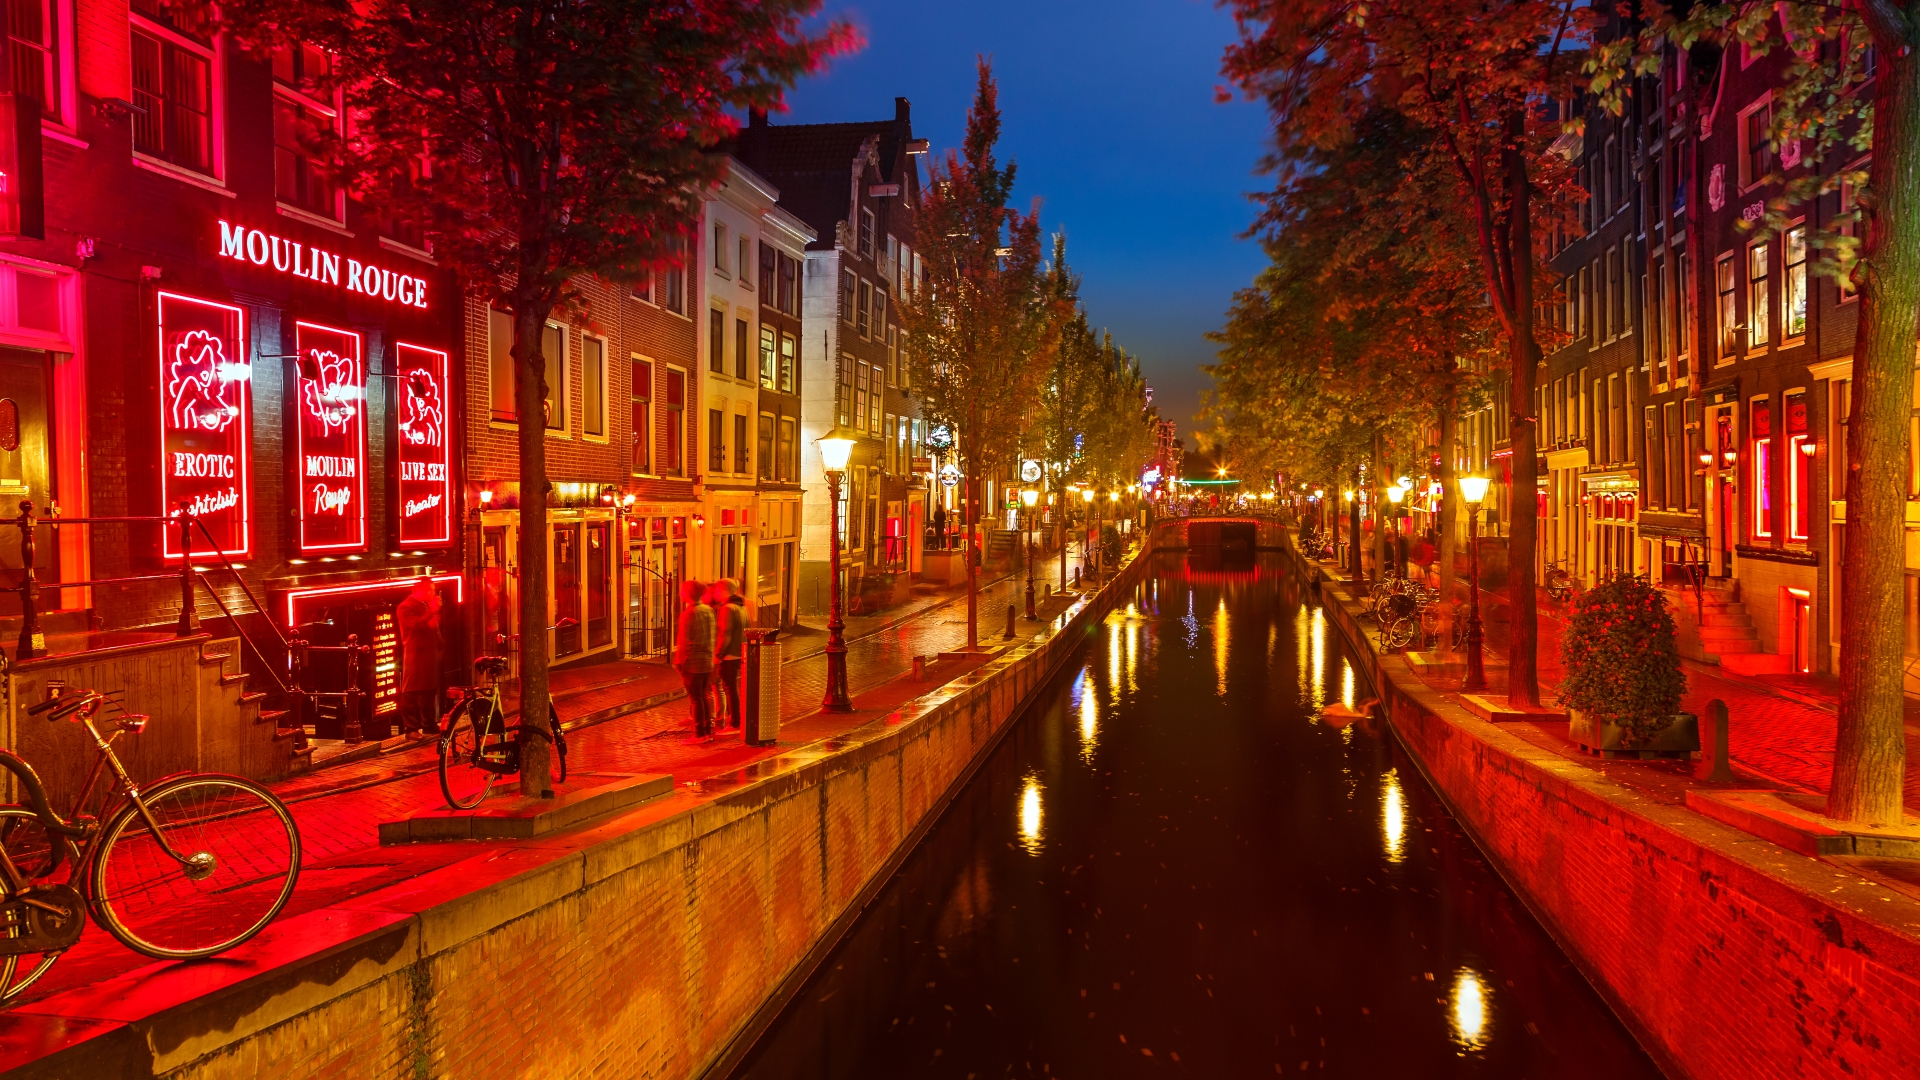 Amsterdam might soon ban pub crawls. This is bad news to Brits